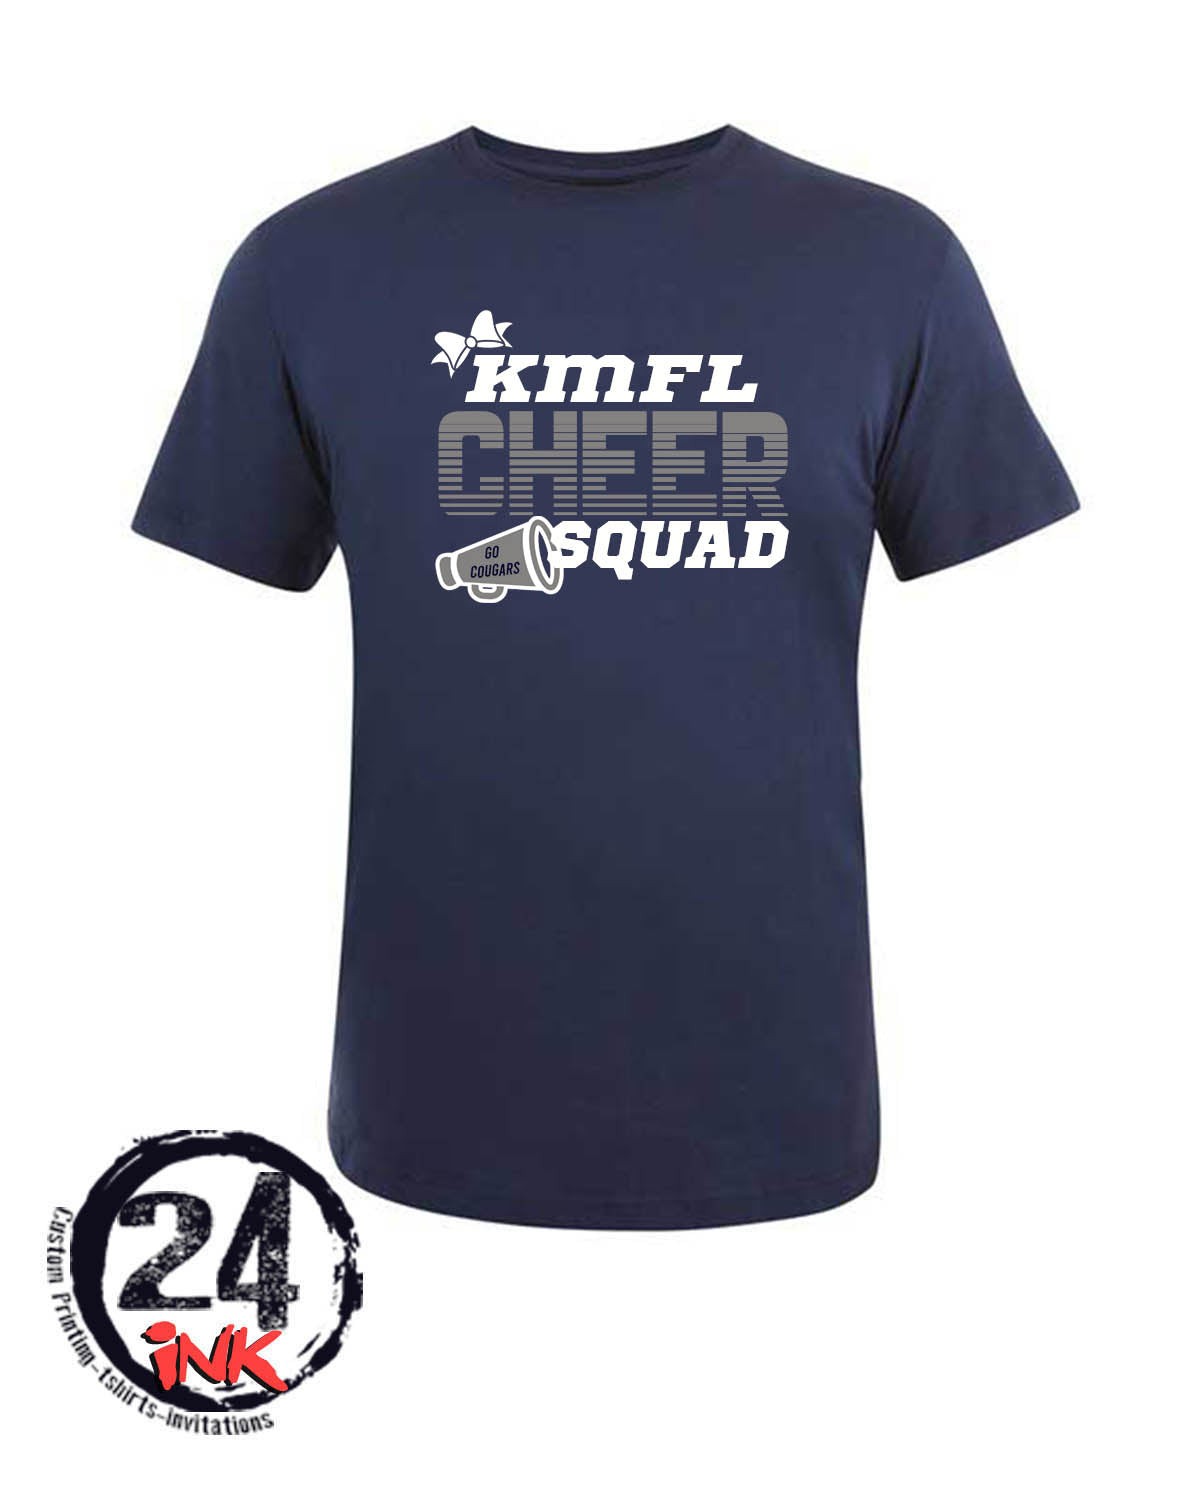 KMFL cheer squad T-Shirt